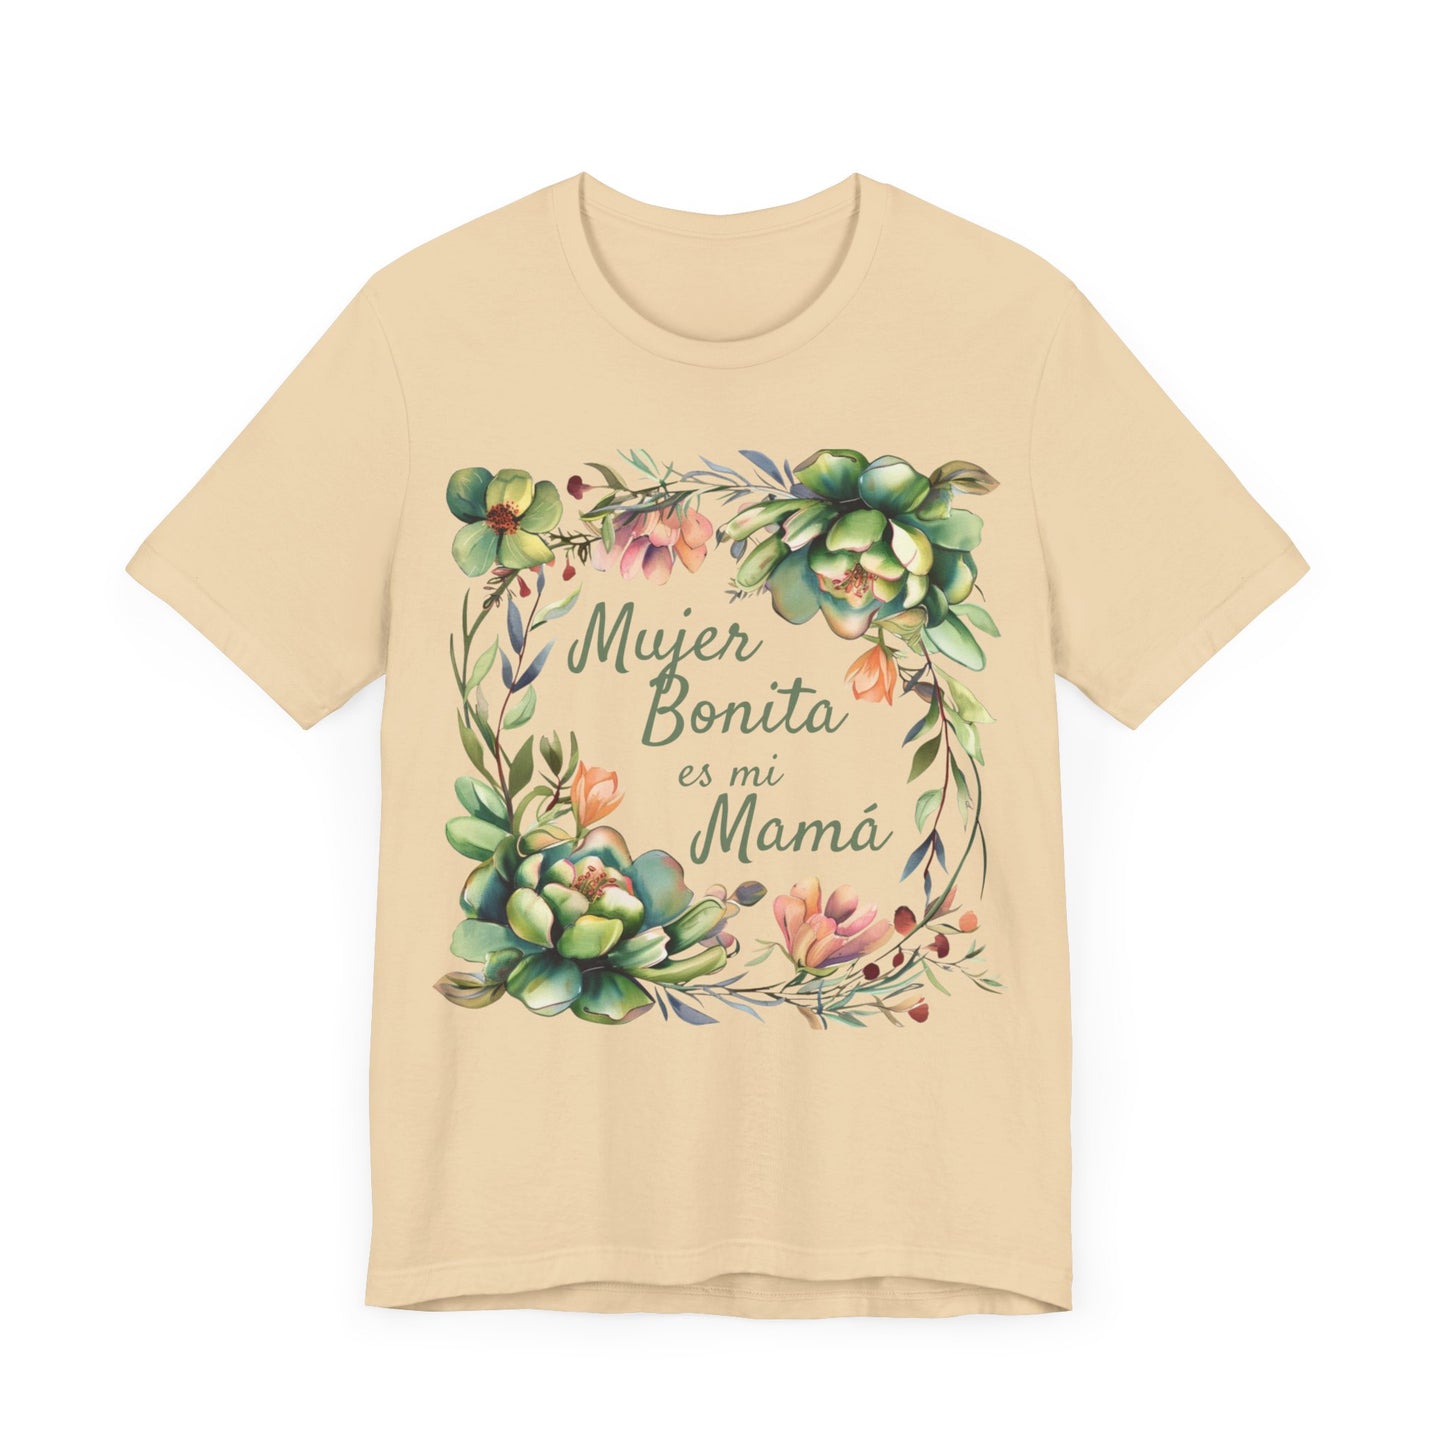 Mujer Bonita Women's T-Shirt